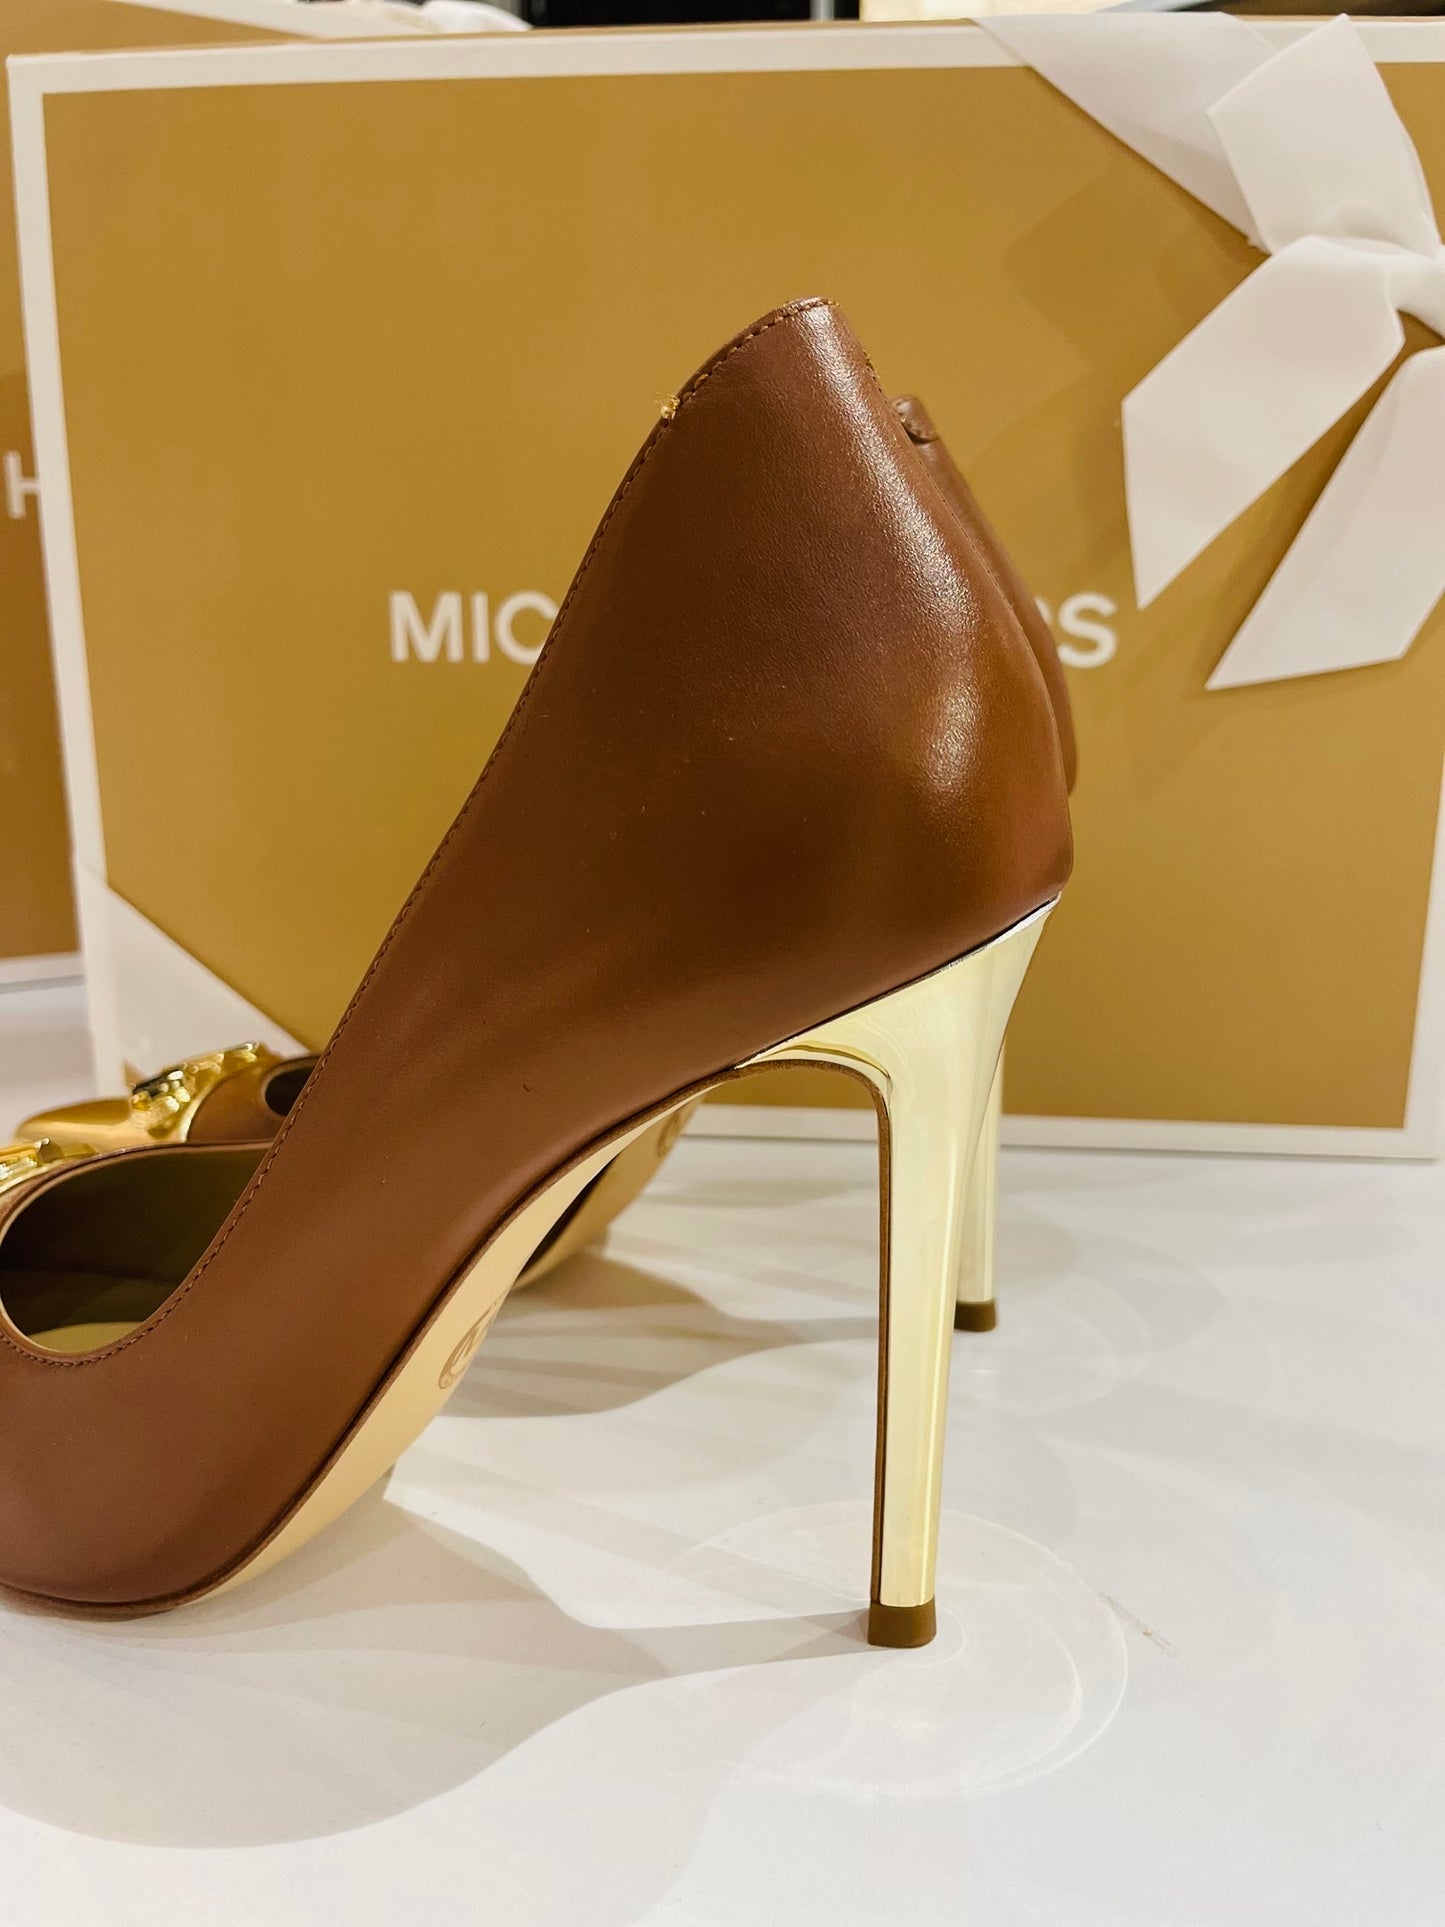 Michael kors heels shoes